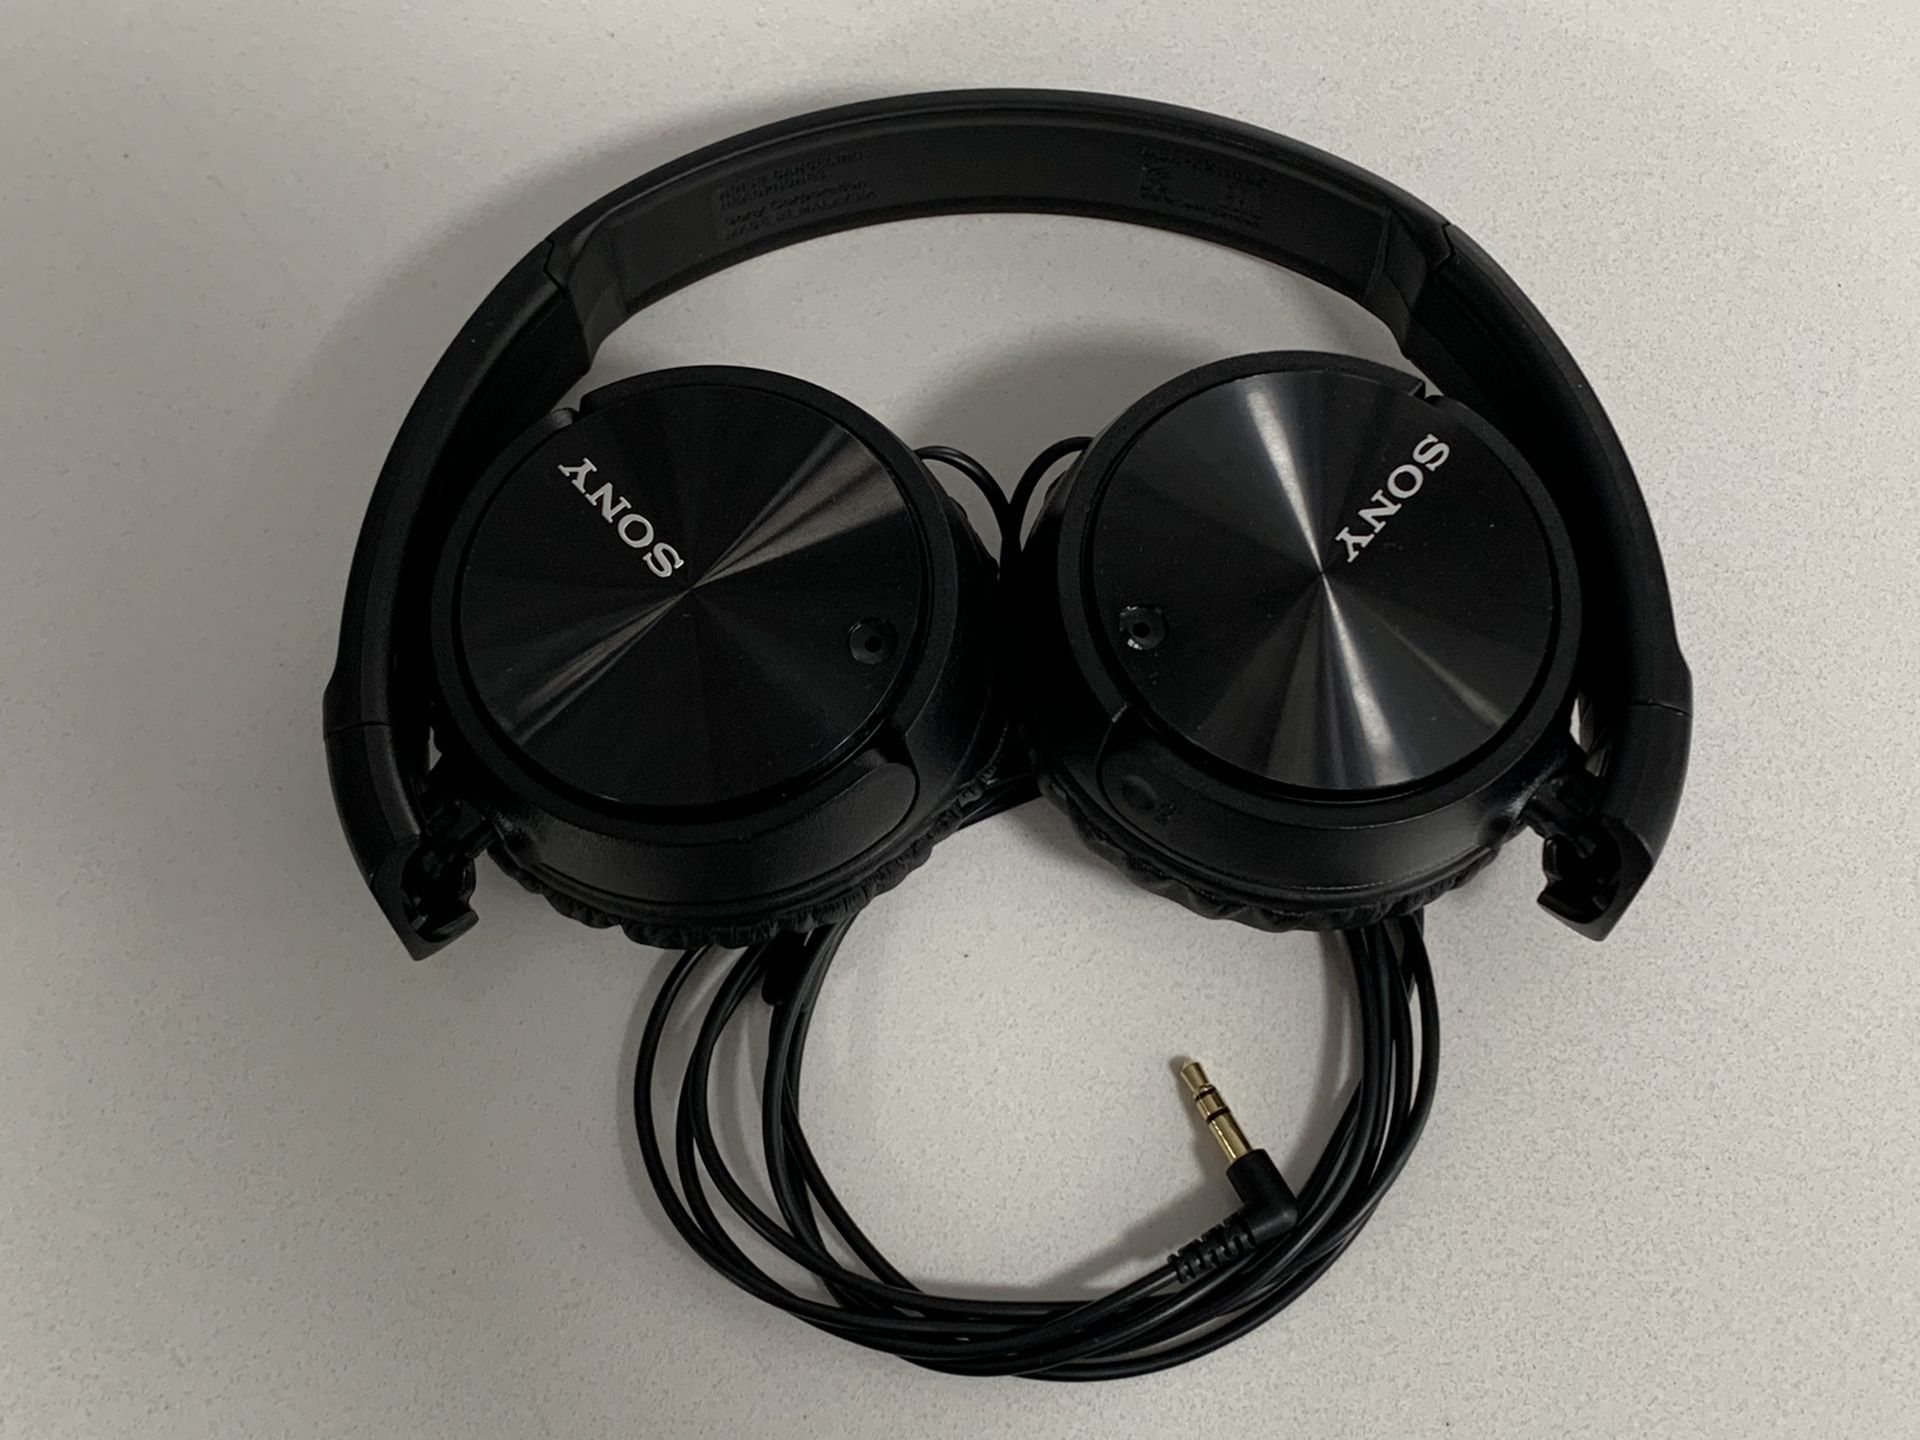 Sony ZX110NC Headband Wired Headphones - Black.